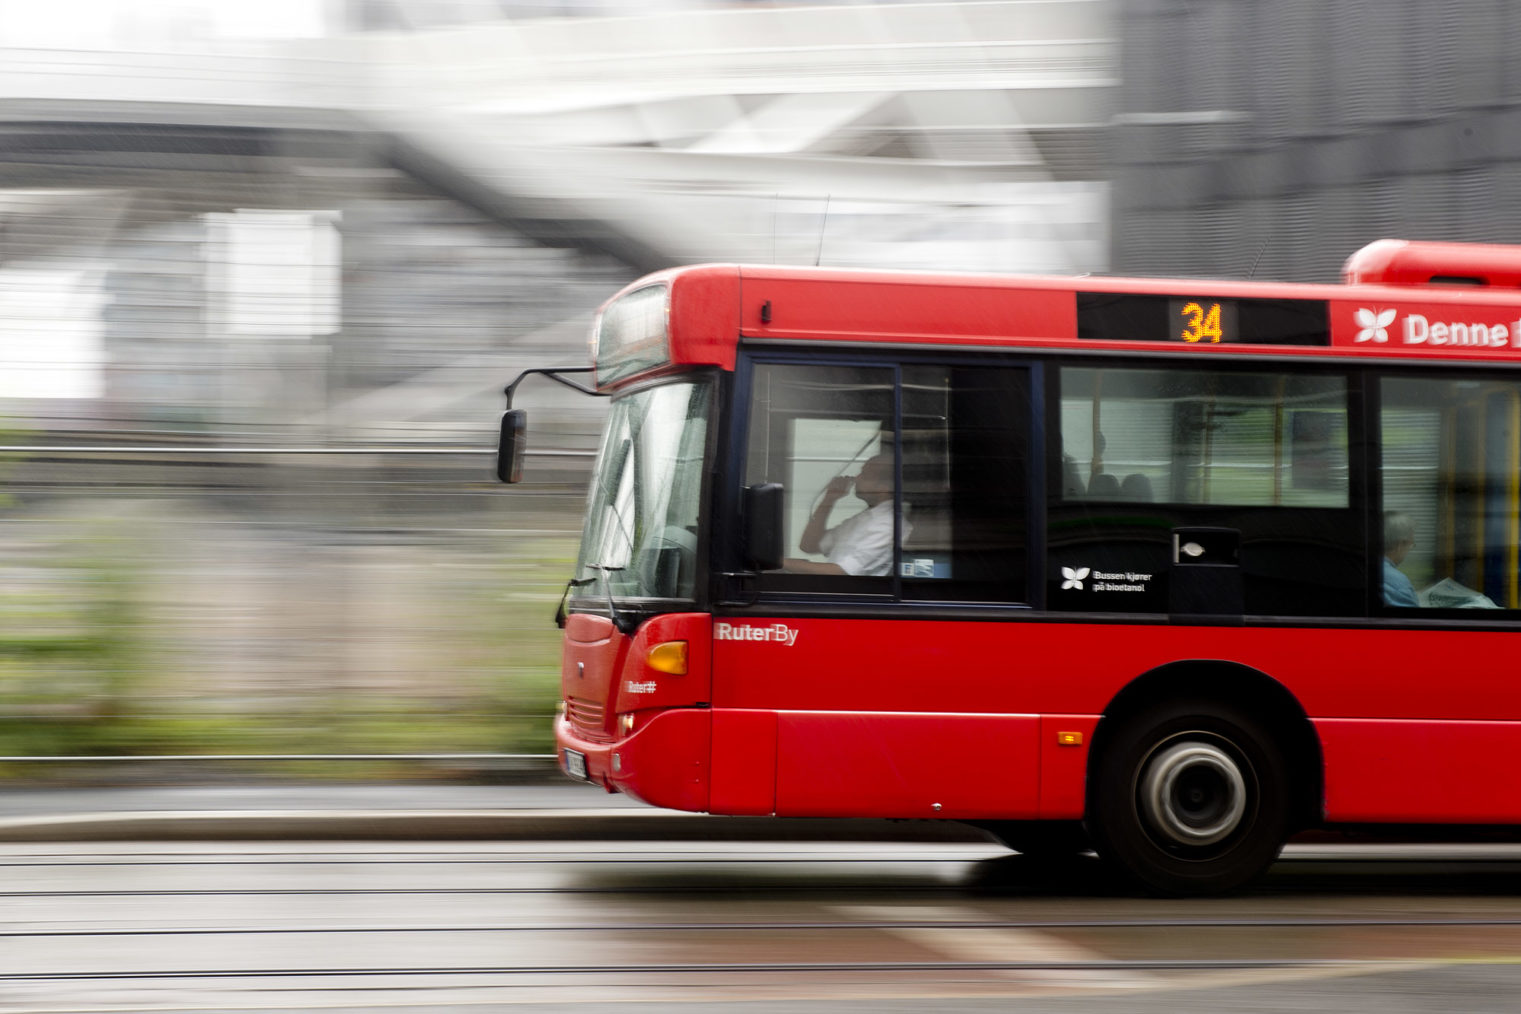 Bilde av rød «Oslo-buss» i fart.